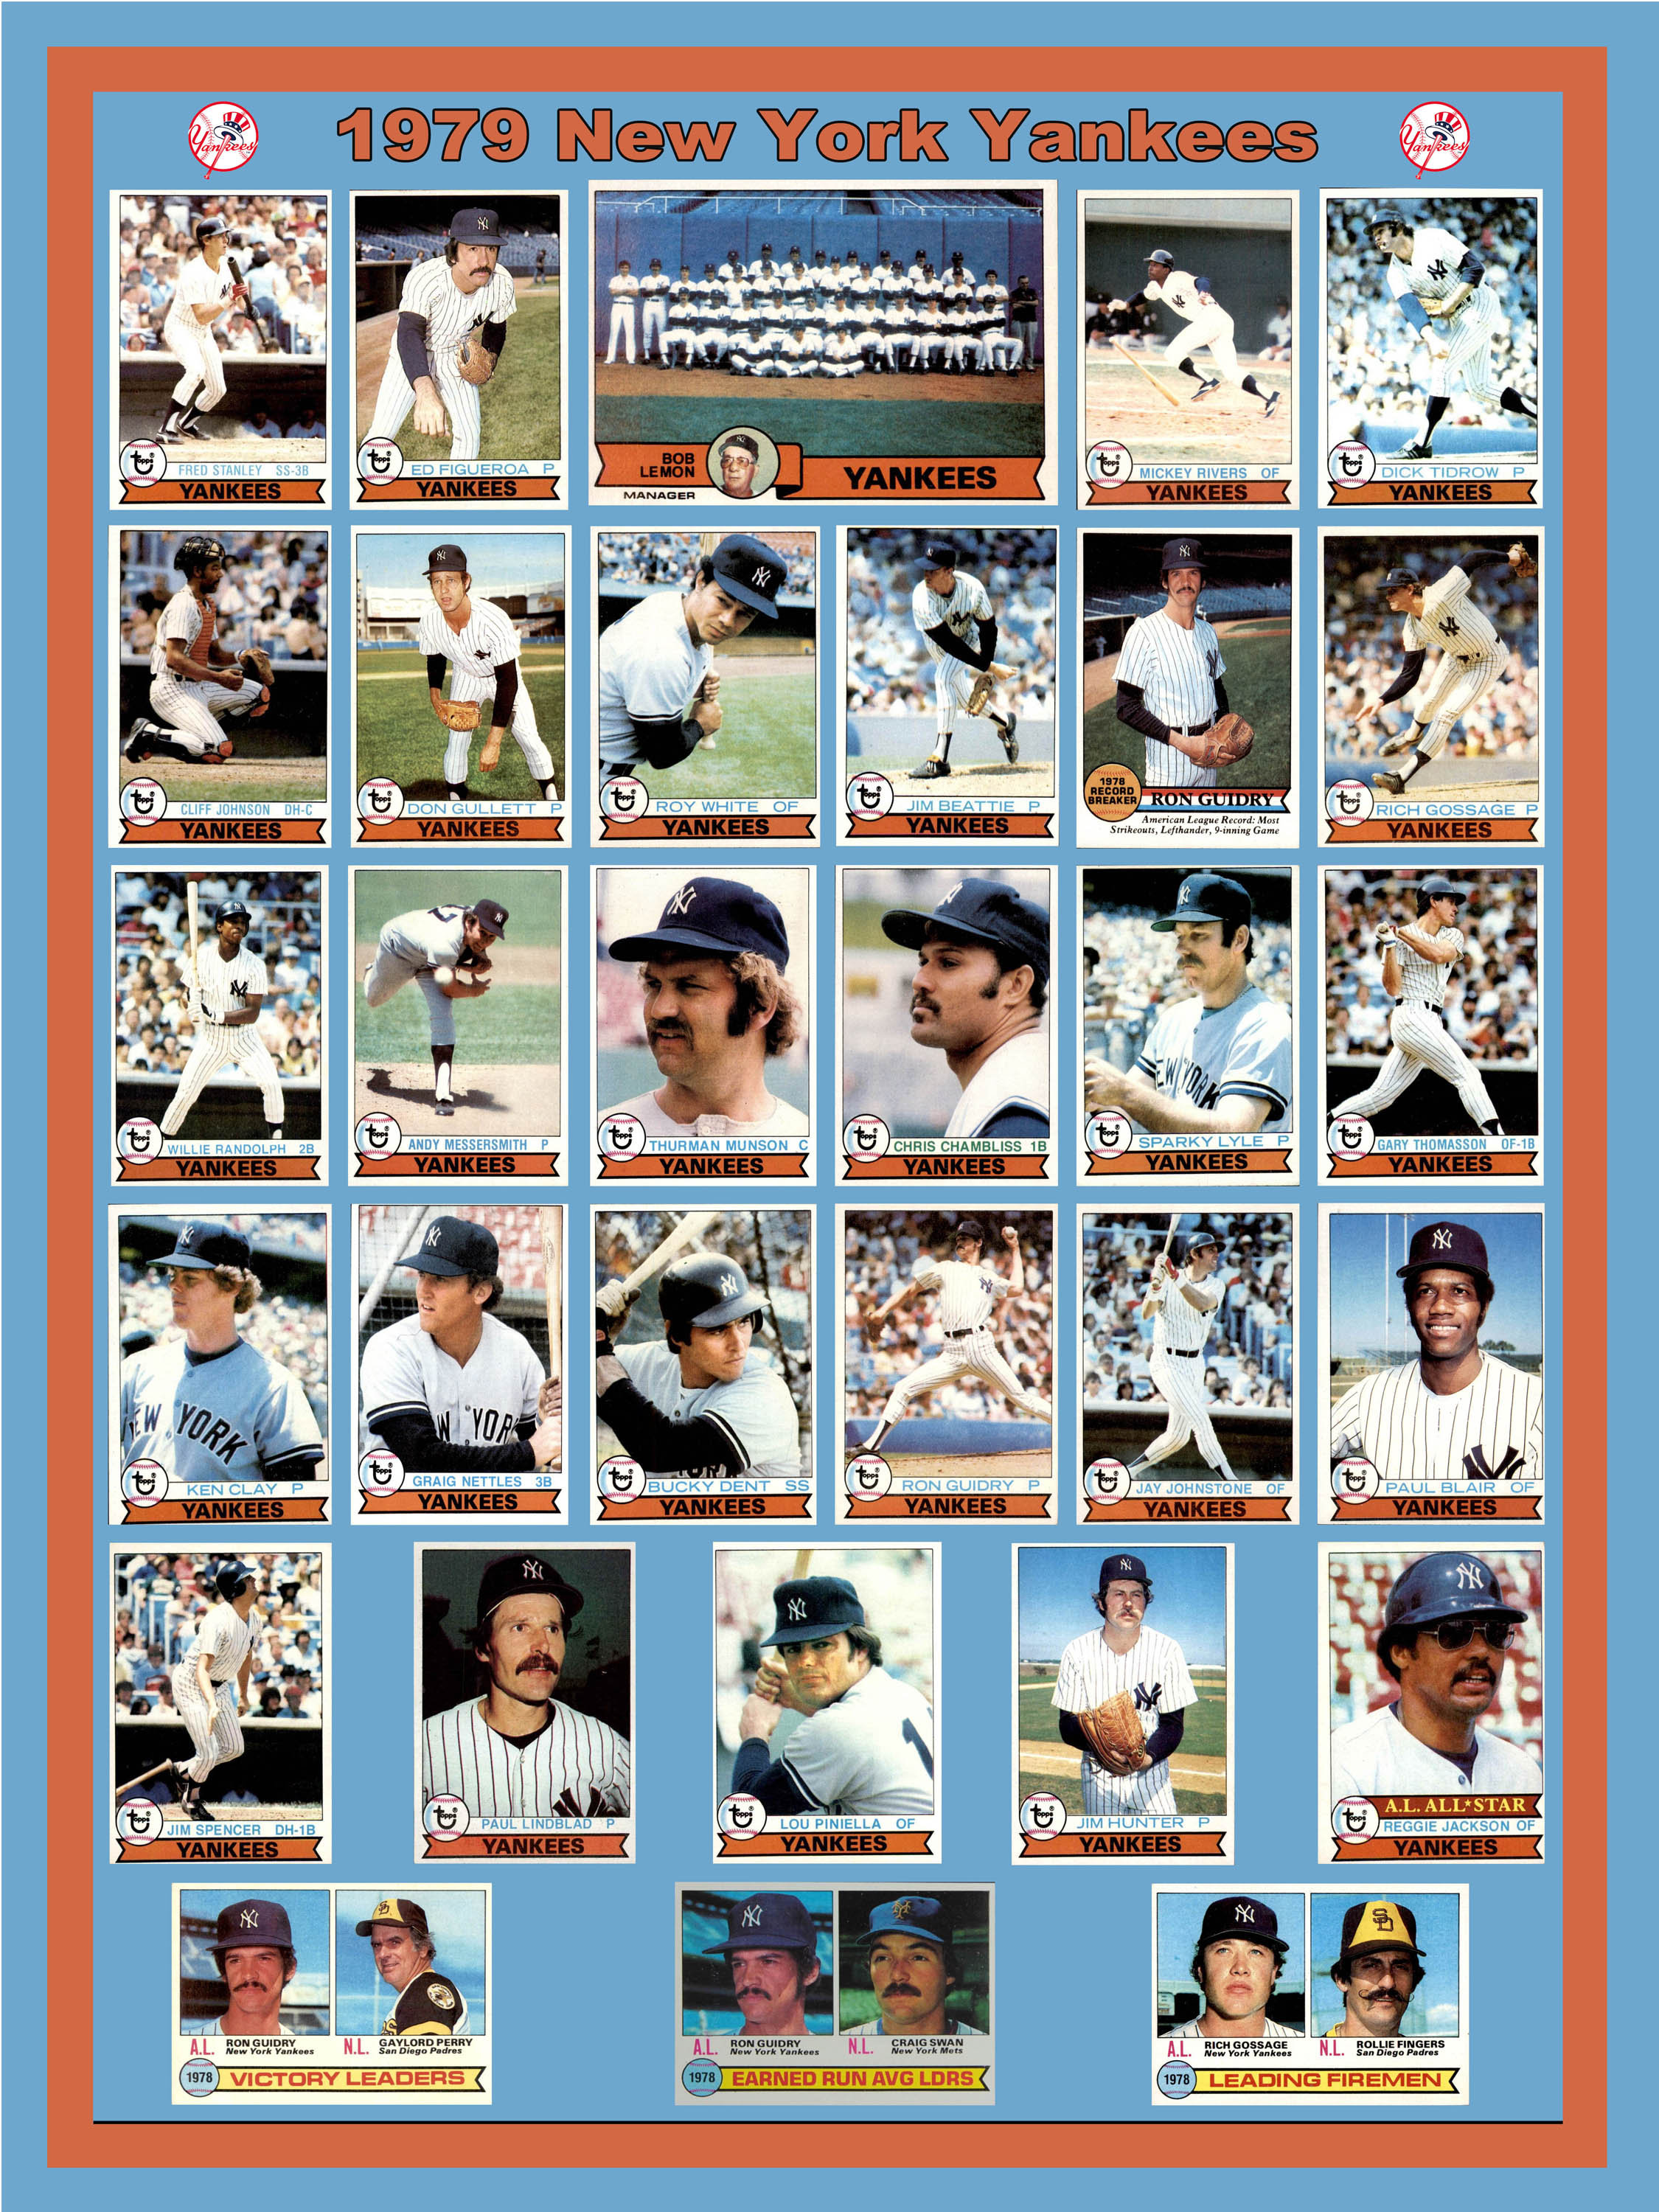 1986 Topps Ron Guidry ALL STAR Baseball Card #721